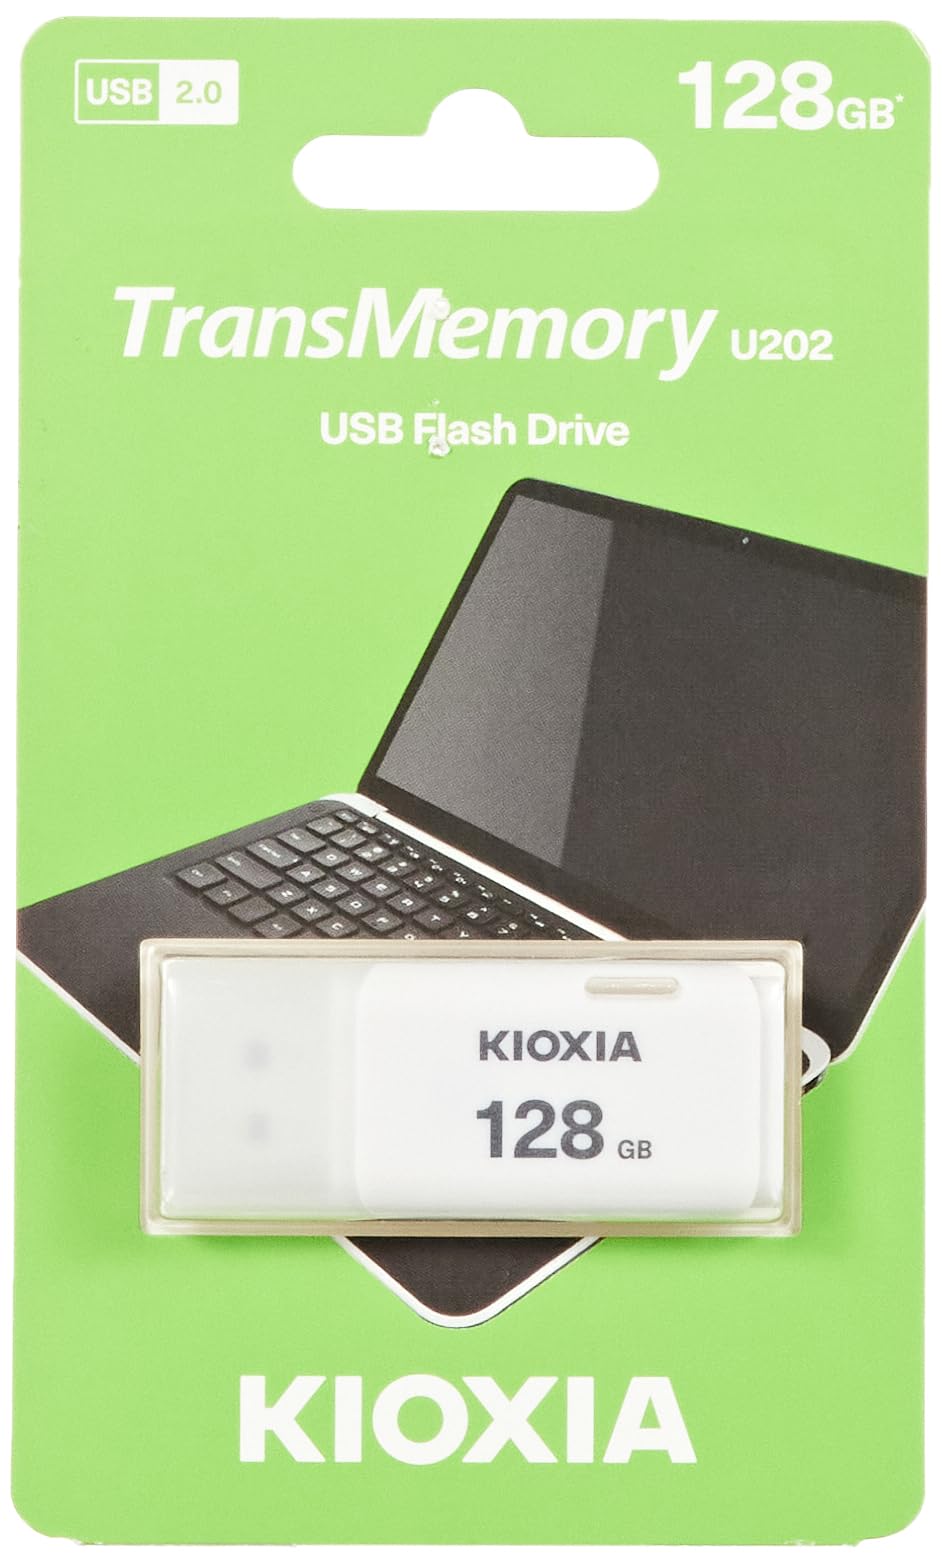 KIOXIA TransMemory U202 LU202W128GG4 （128GB ホワイト 海外パッケージ品） TransMemory（KIOXIA） USBメモリの商品画像